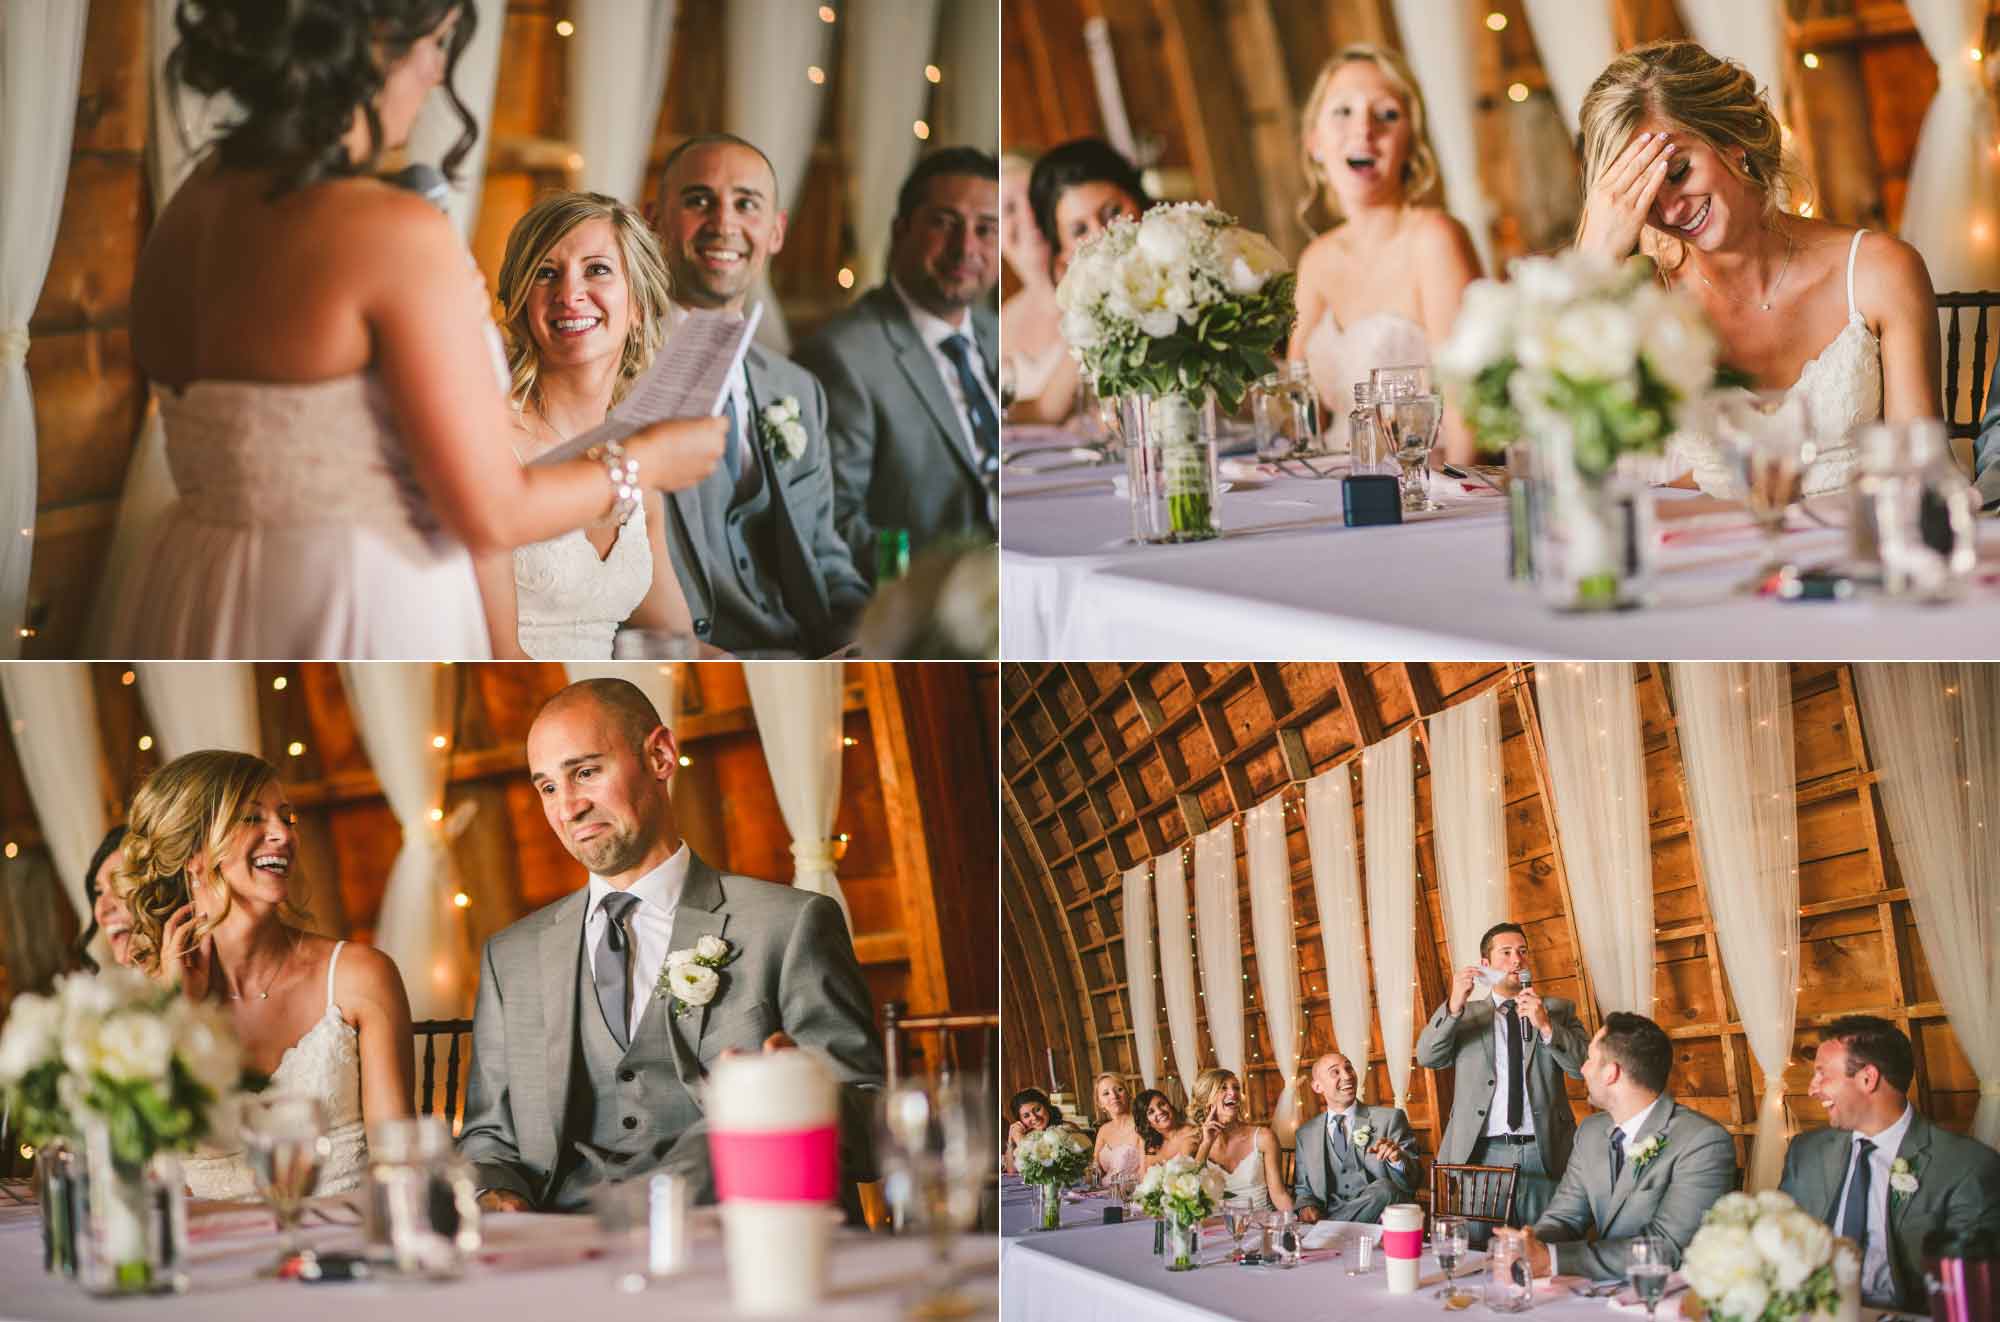 22-barn-wedding-reception-toasts.jpg